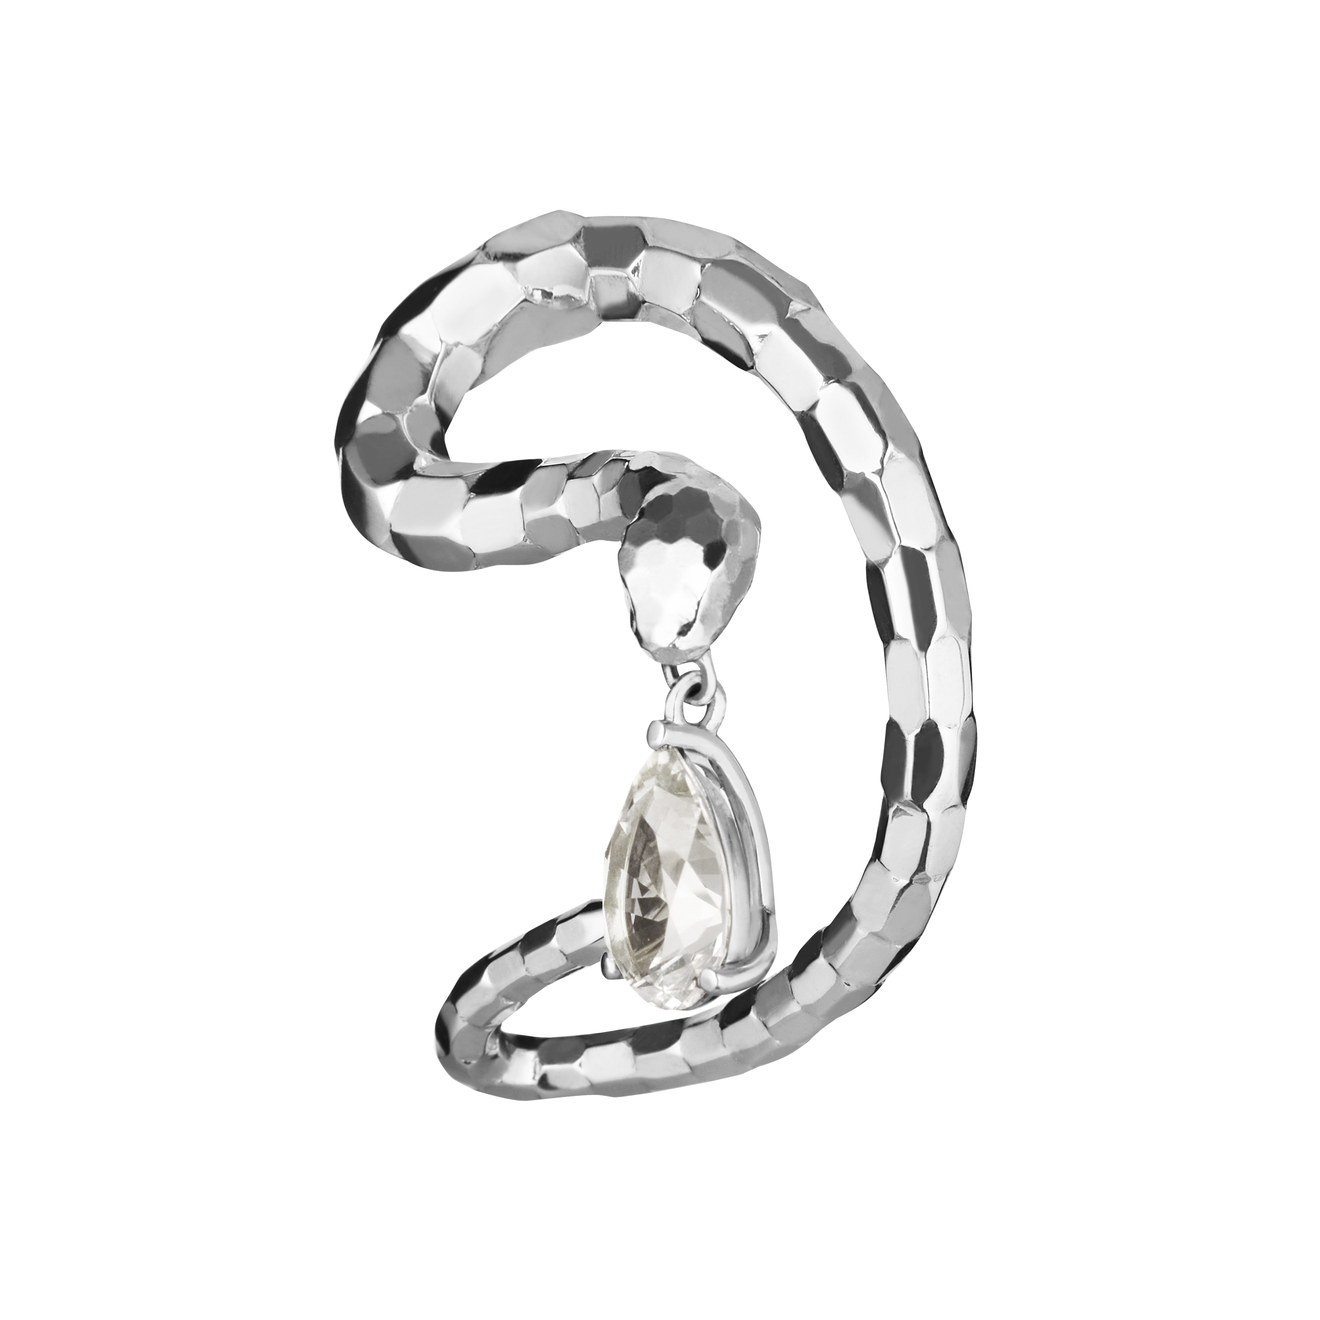 Vertigo Jewellery Lab Кафф-змея VENENUM из серебра vertigo jewellery lab позолоченный клаймбер venenum climber из серебра